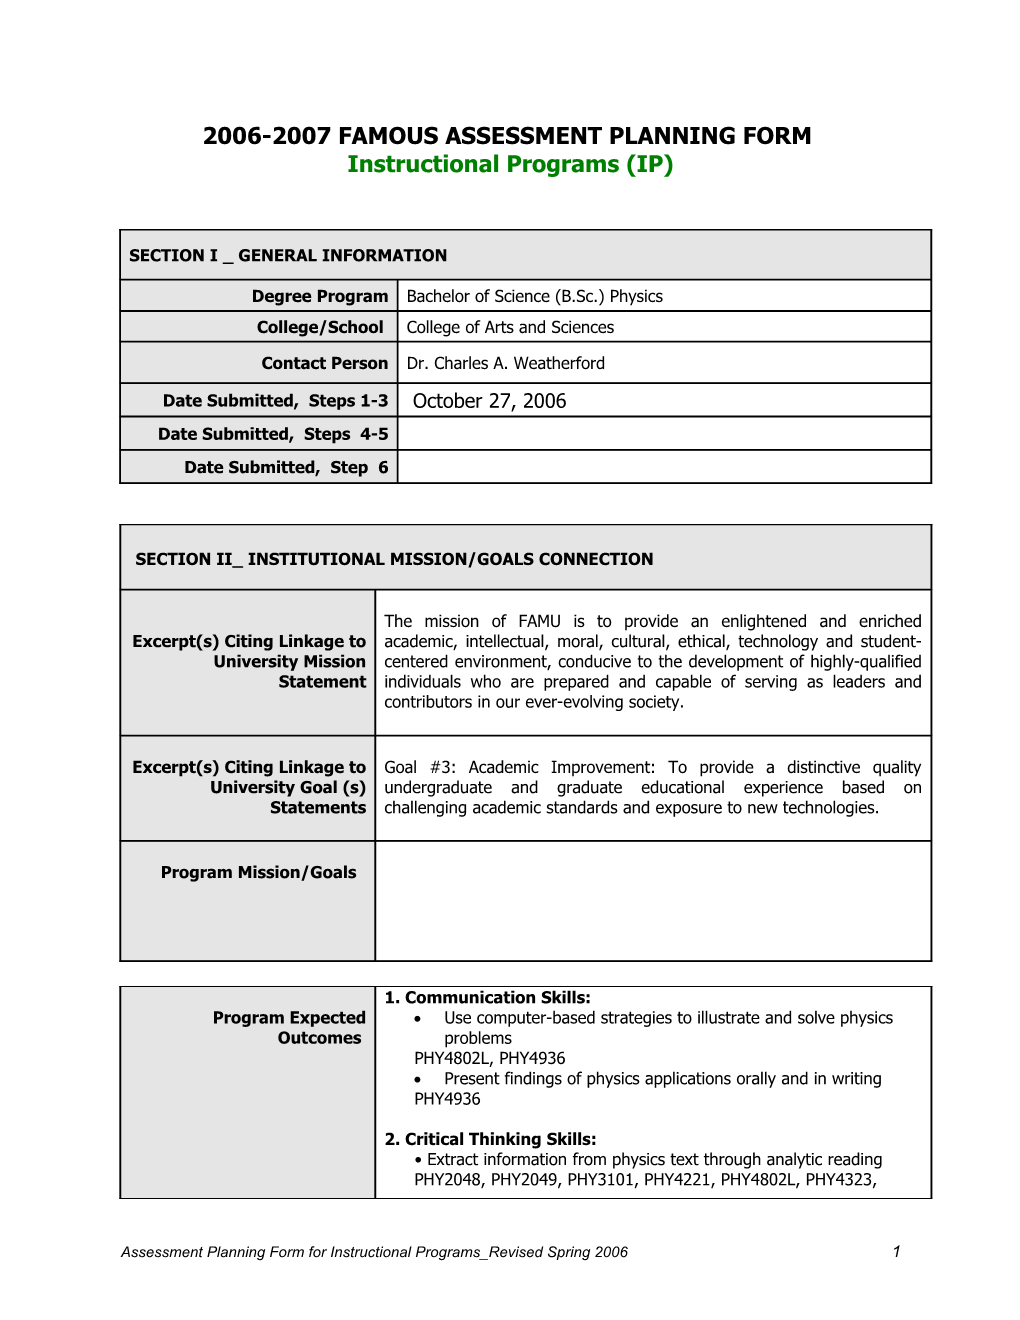 Famu Assessment Planning Form Ip